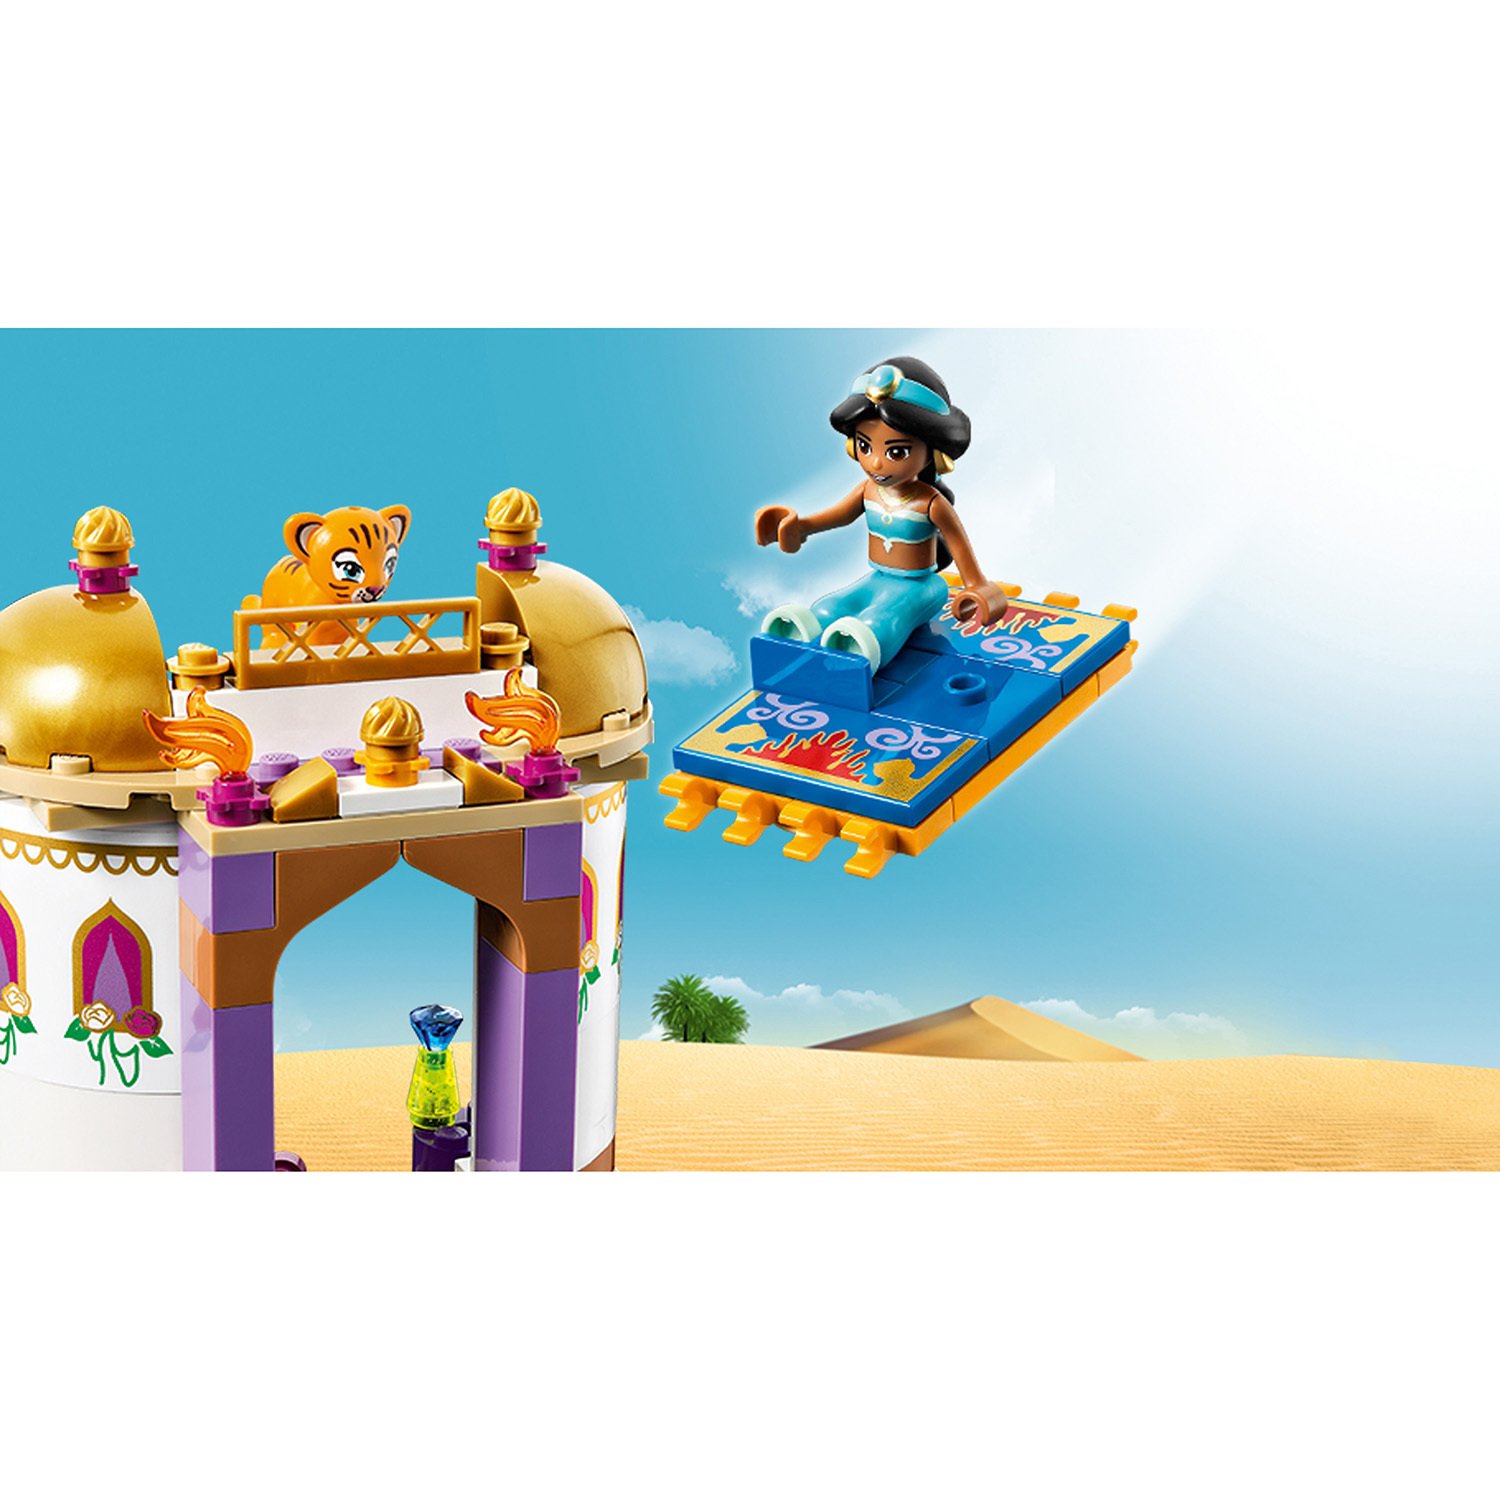 Lego Disney Princess 41061 Экзотический дворец Жасмин